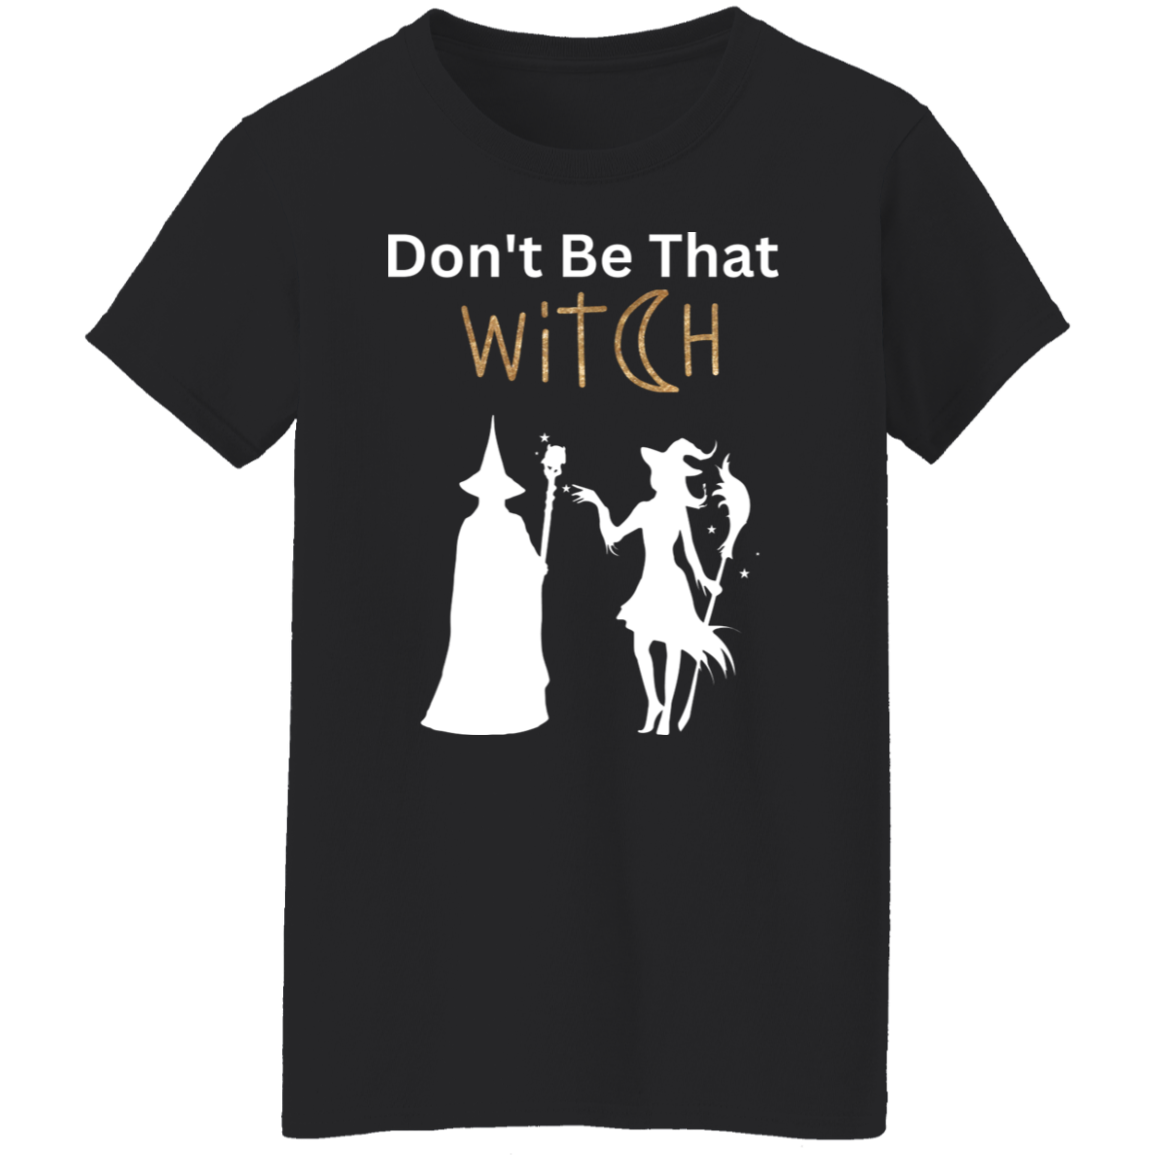 Ladies 5.3oz. T-Shirt (Don't be that witch) White print